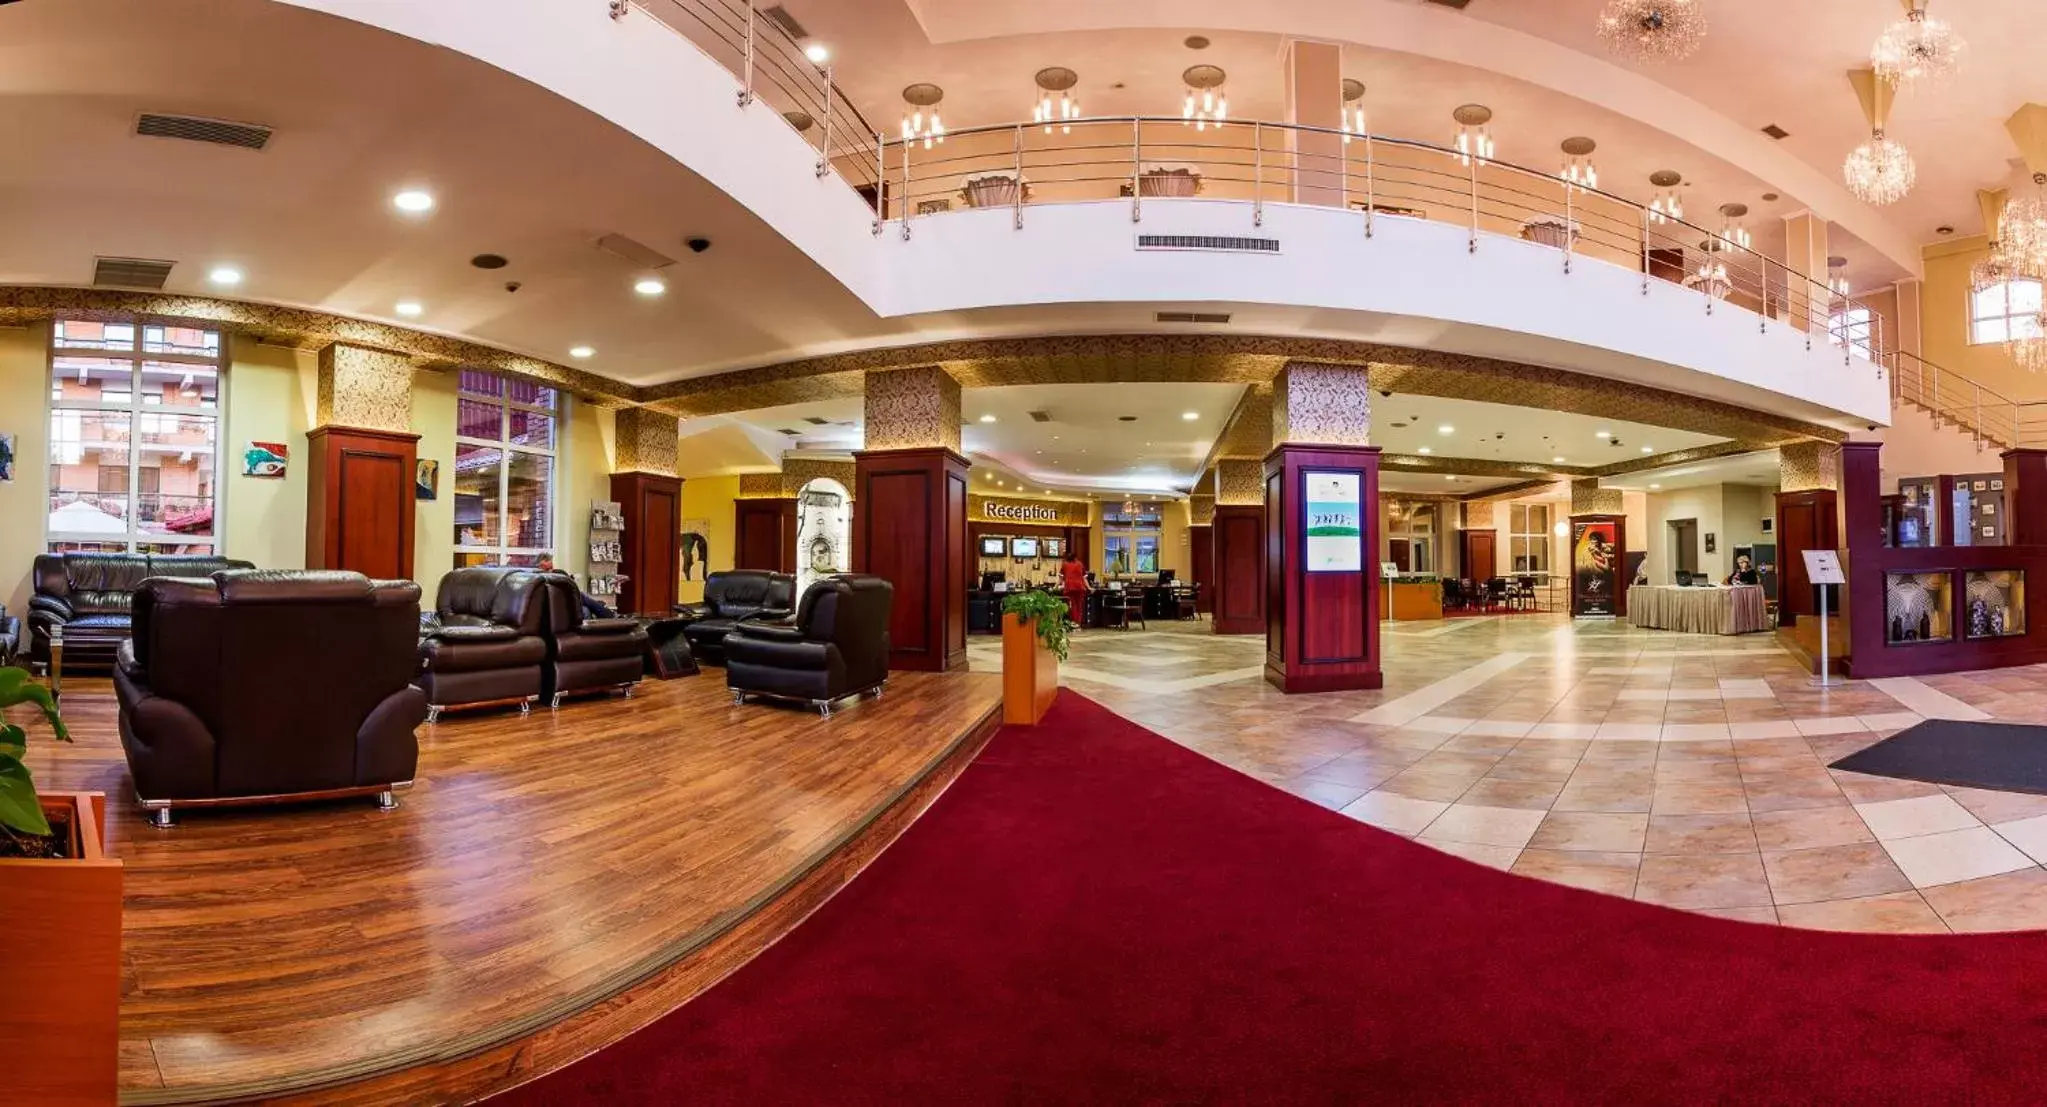 Lobby or reception in Caro Hotel